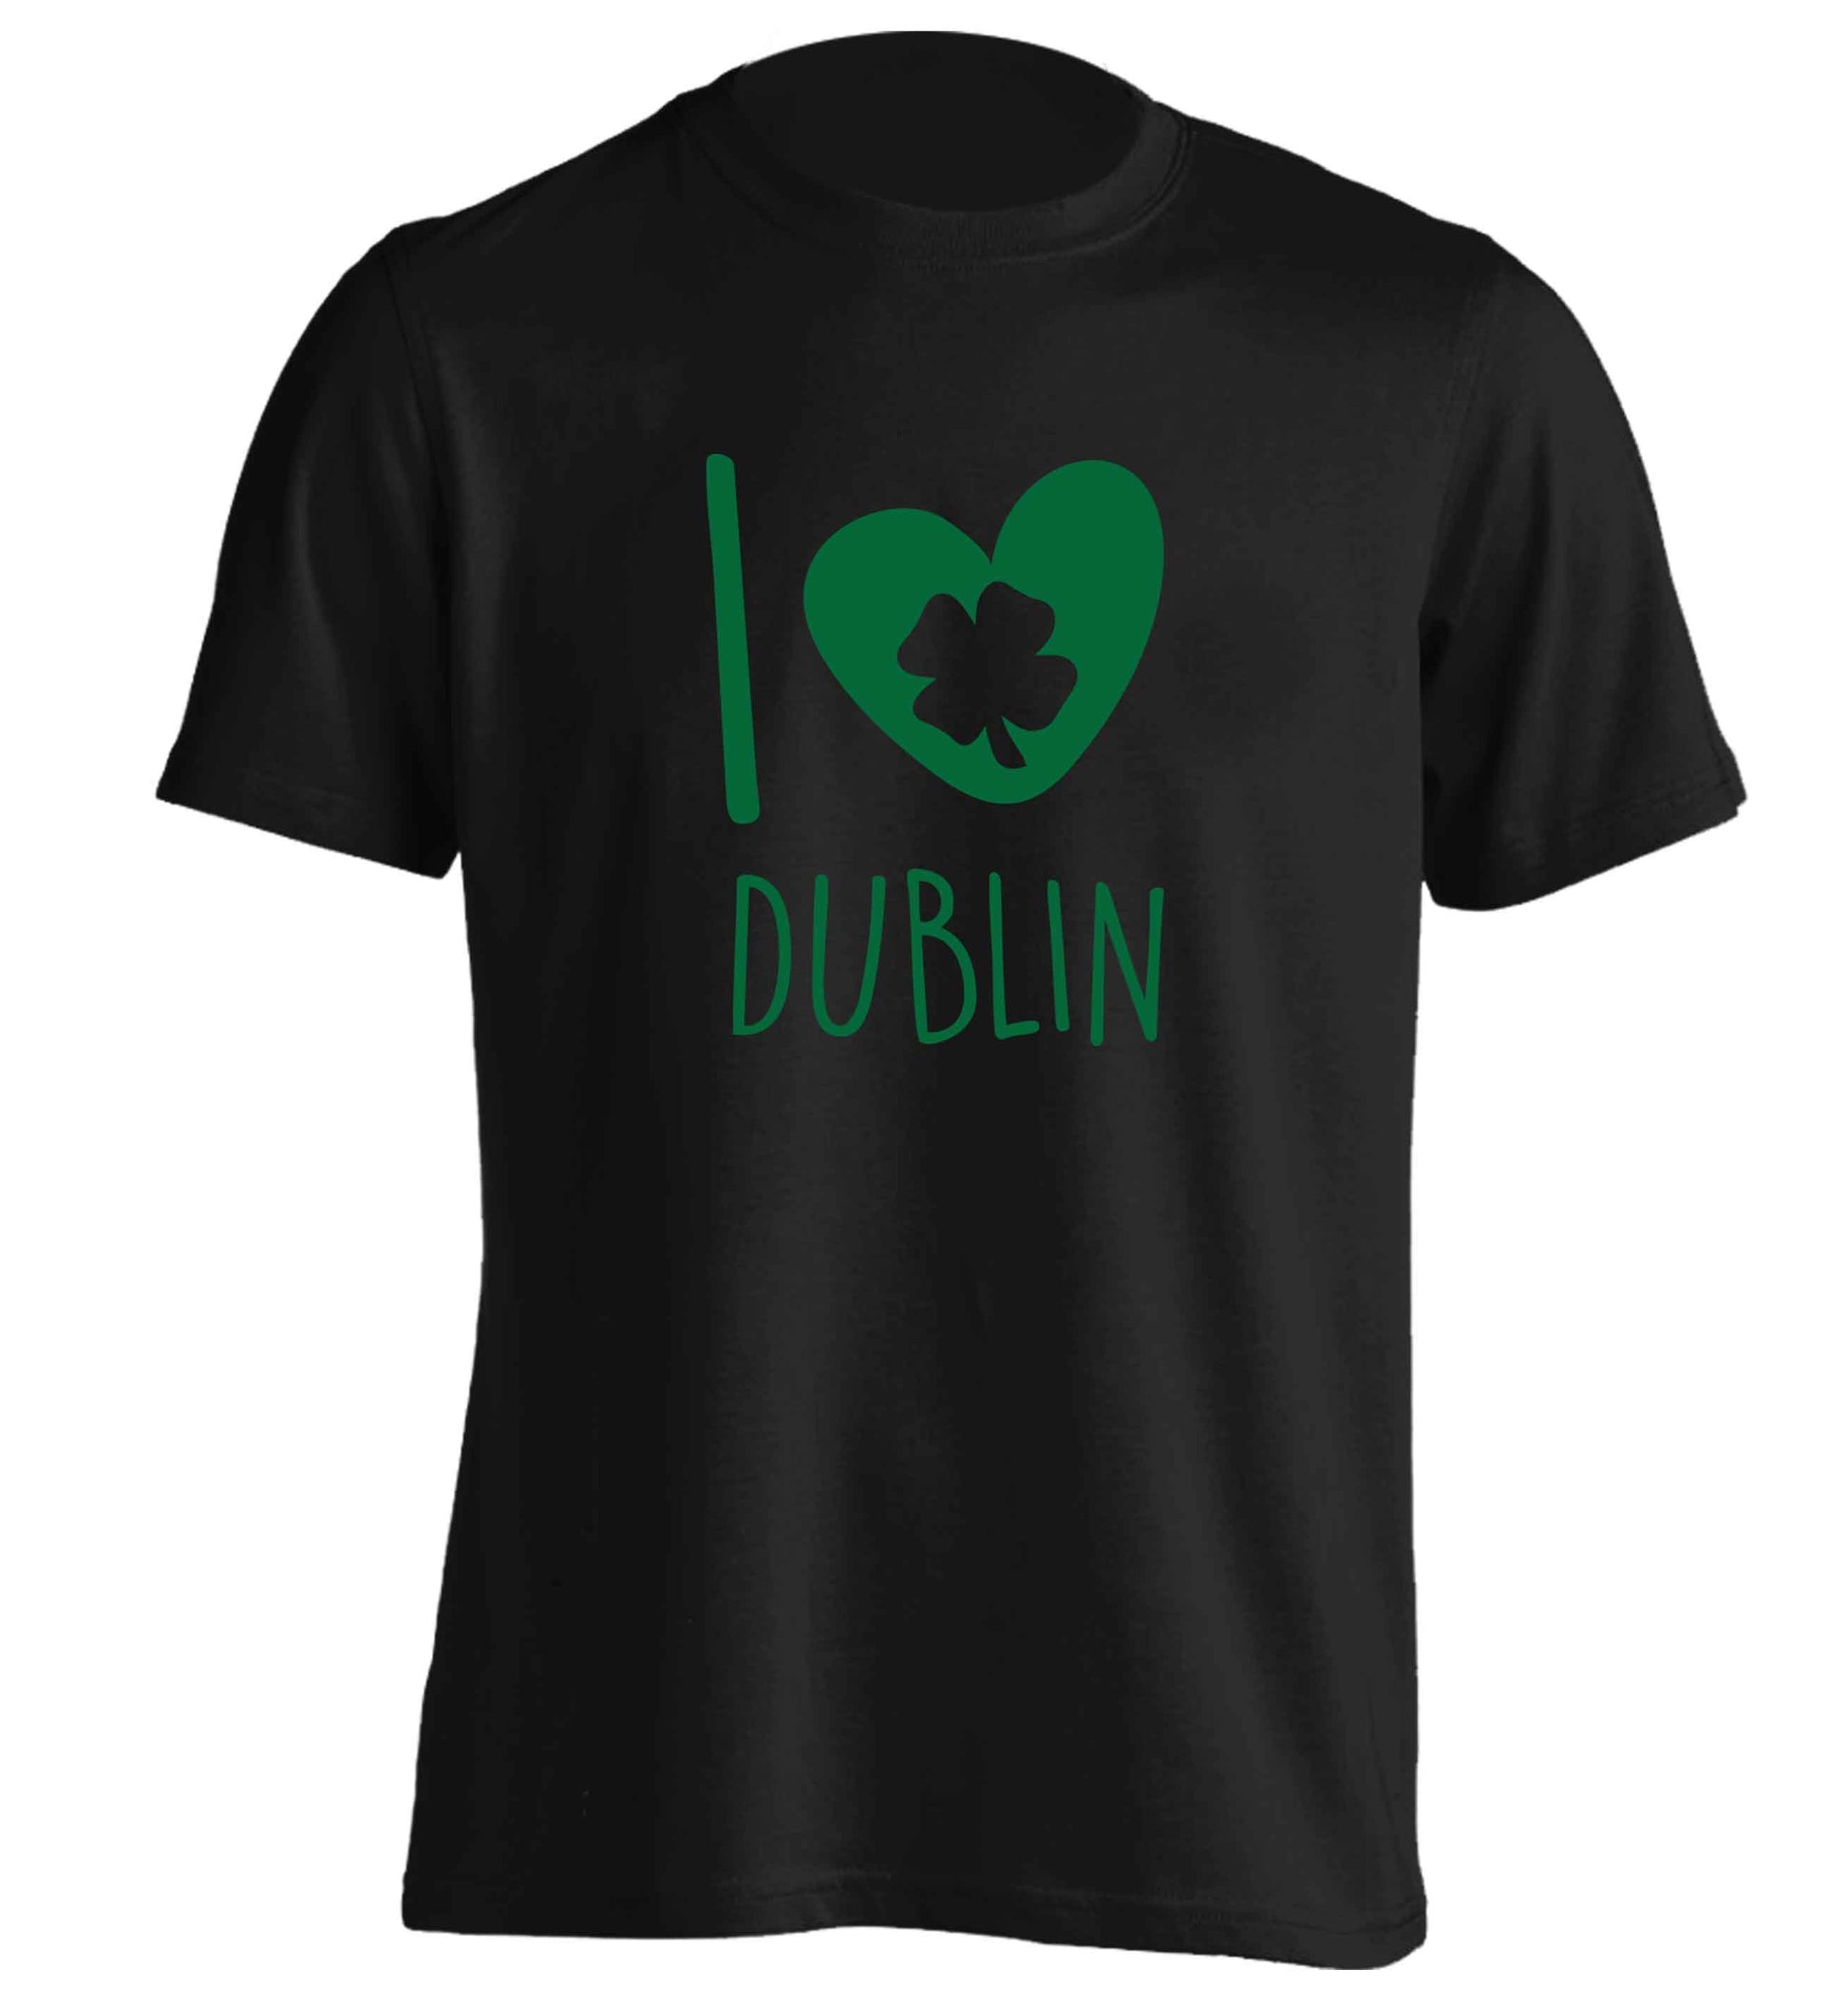 I love Dublin adults unisex black Tshirt 2XL